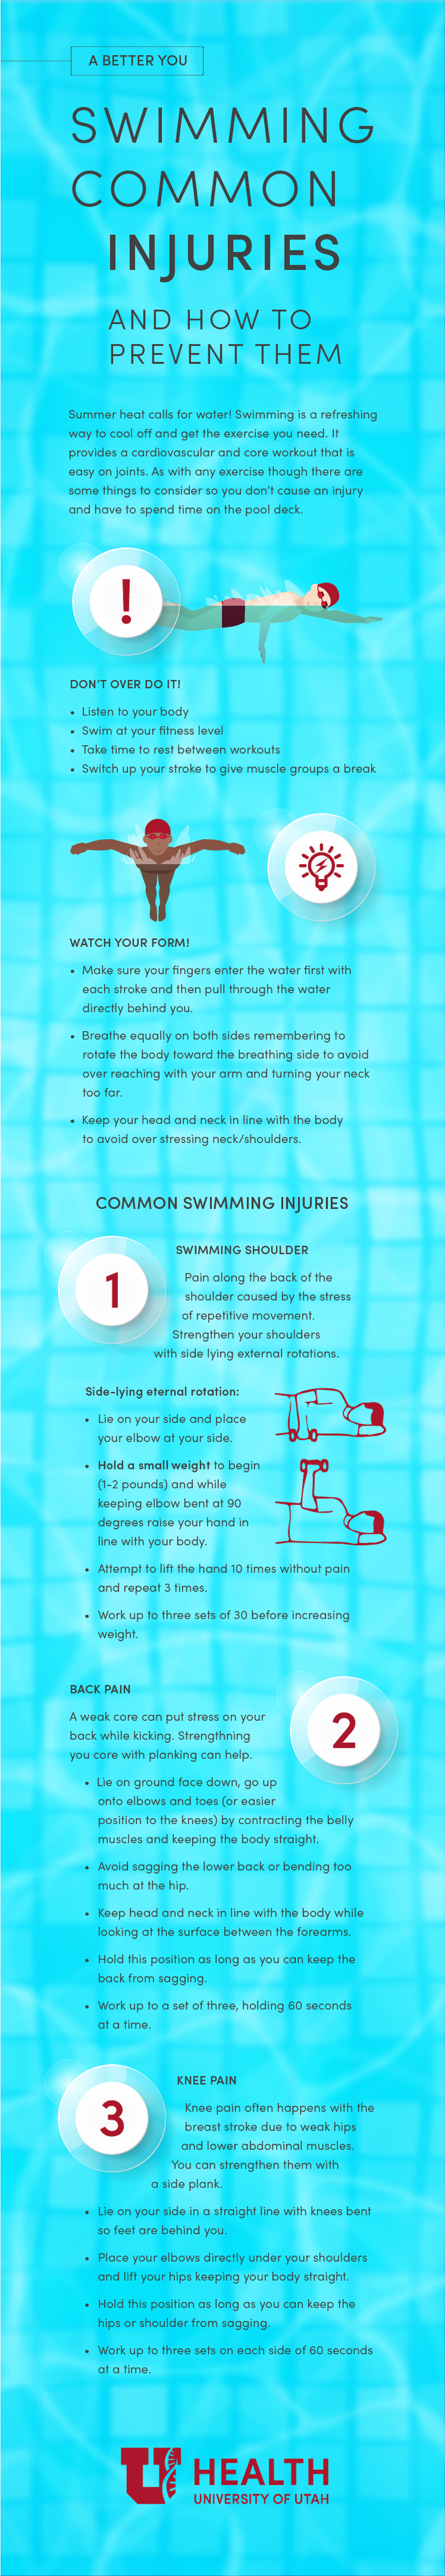 Swimming injuries infographic